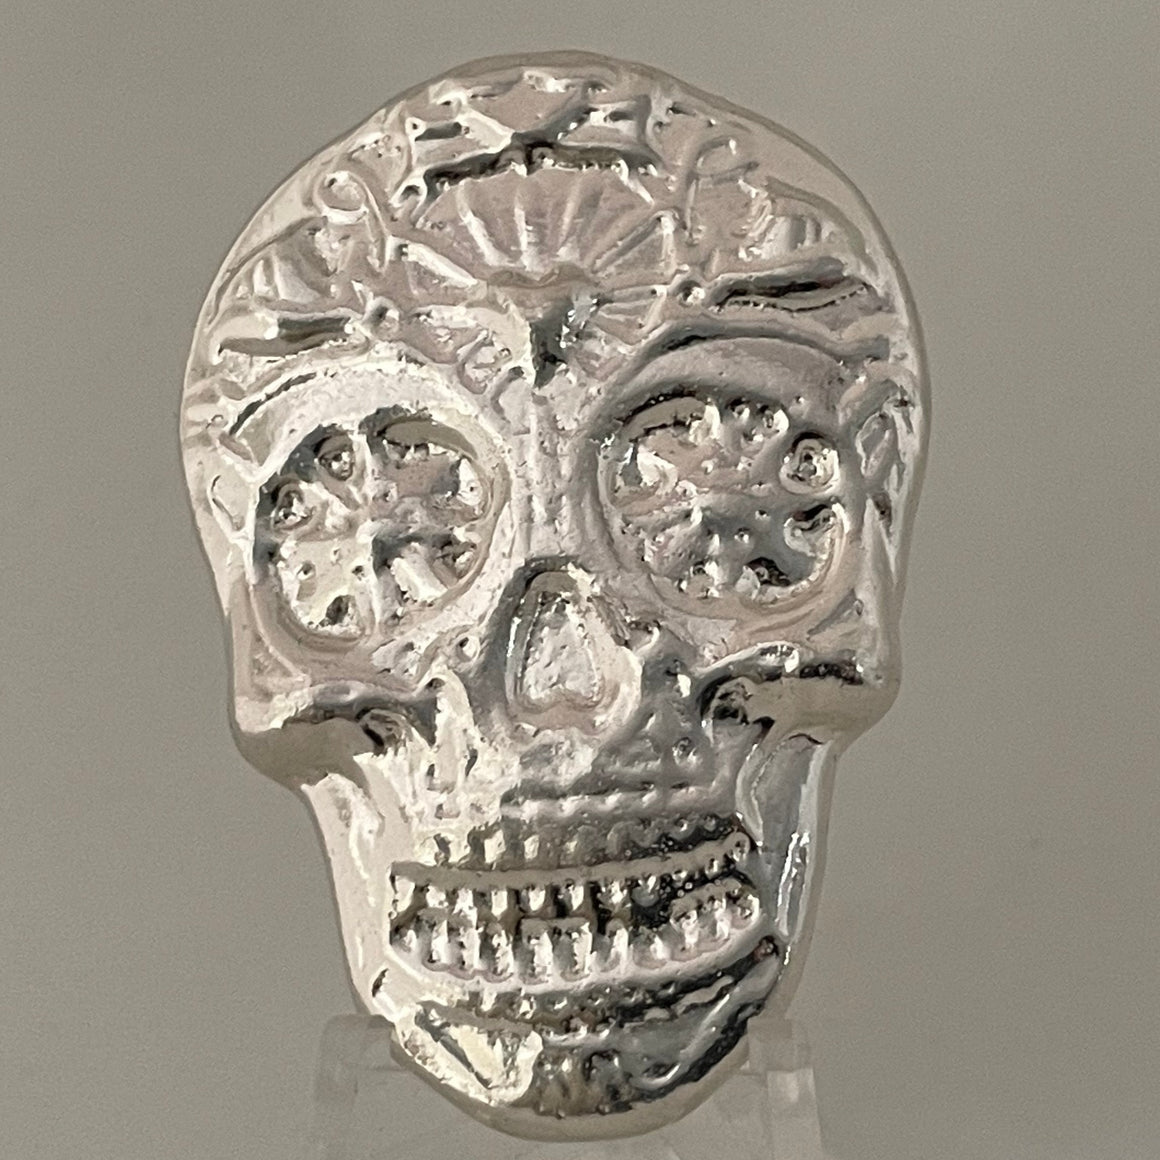 Sugar Skull by Tomoko's Enterprize, 3oz .999 Fine Silver Hand Poured Art